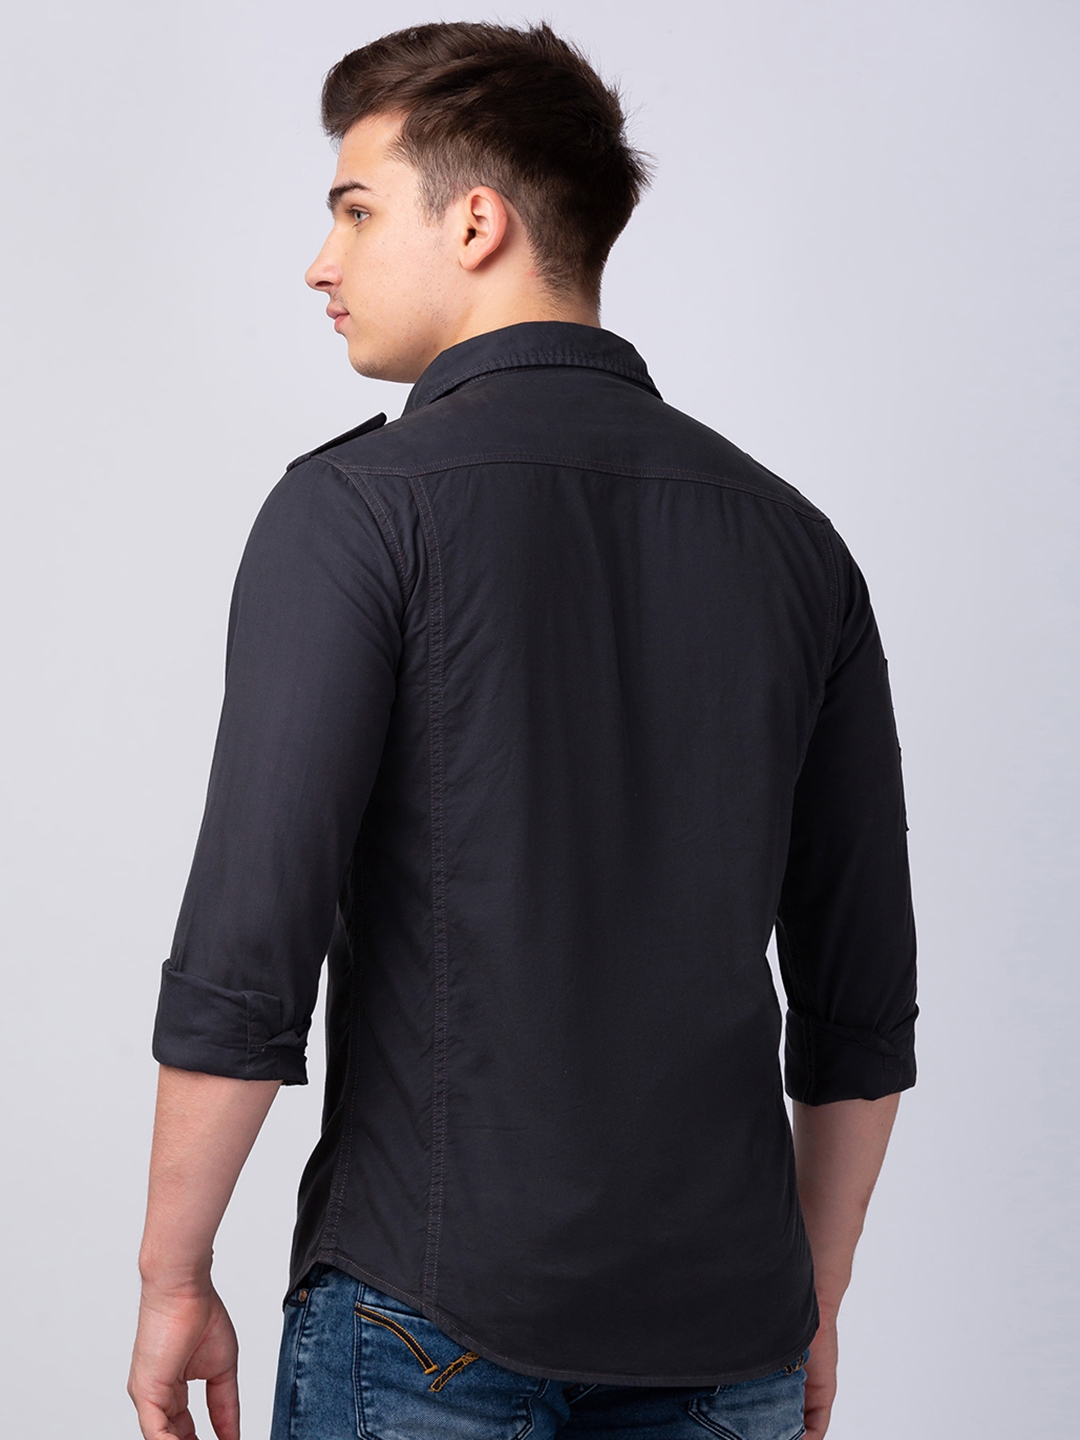 Spykar | Men's Grey Cotton Solid Casual Shirts 2